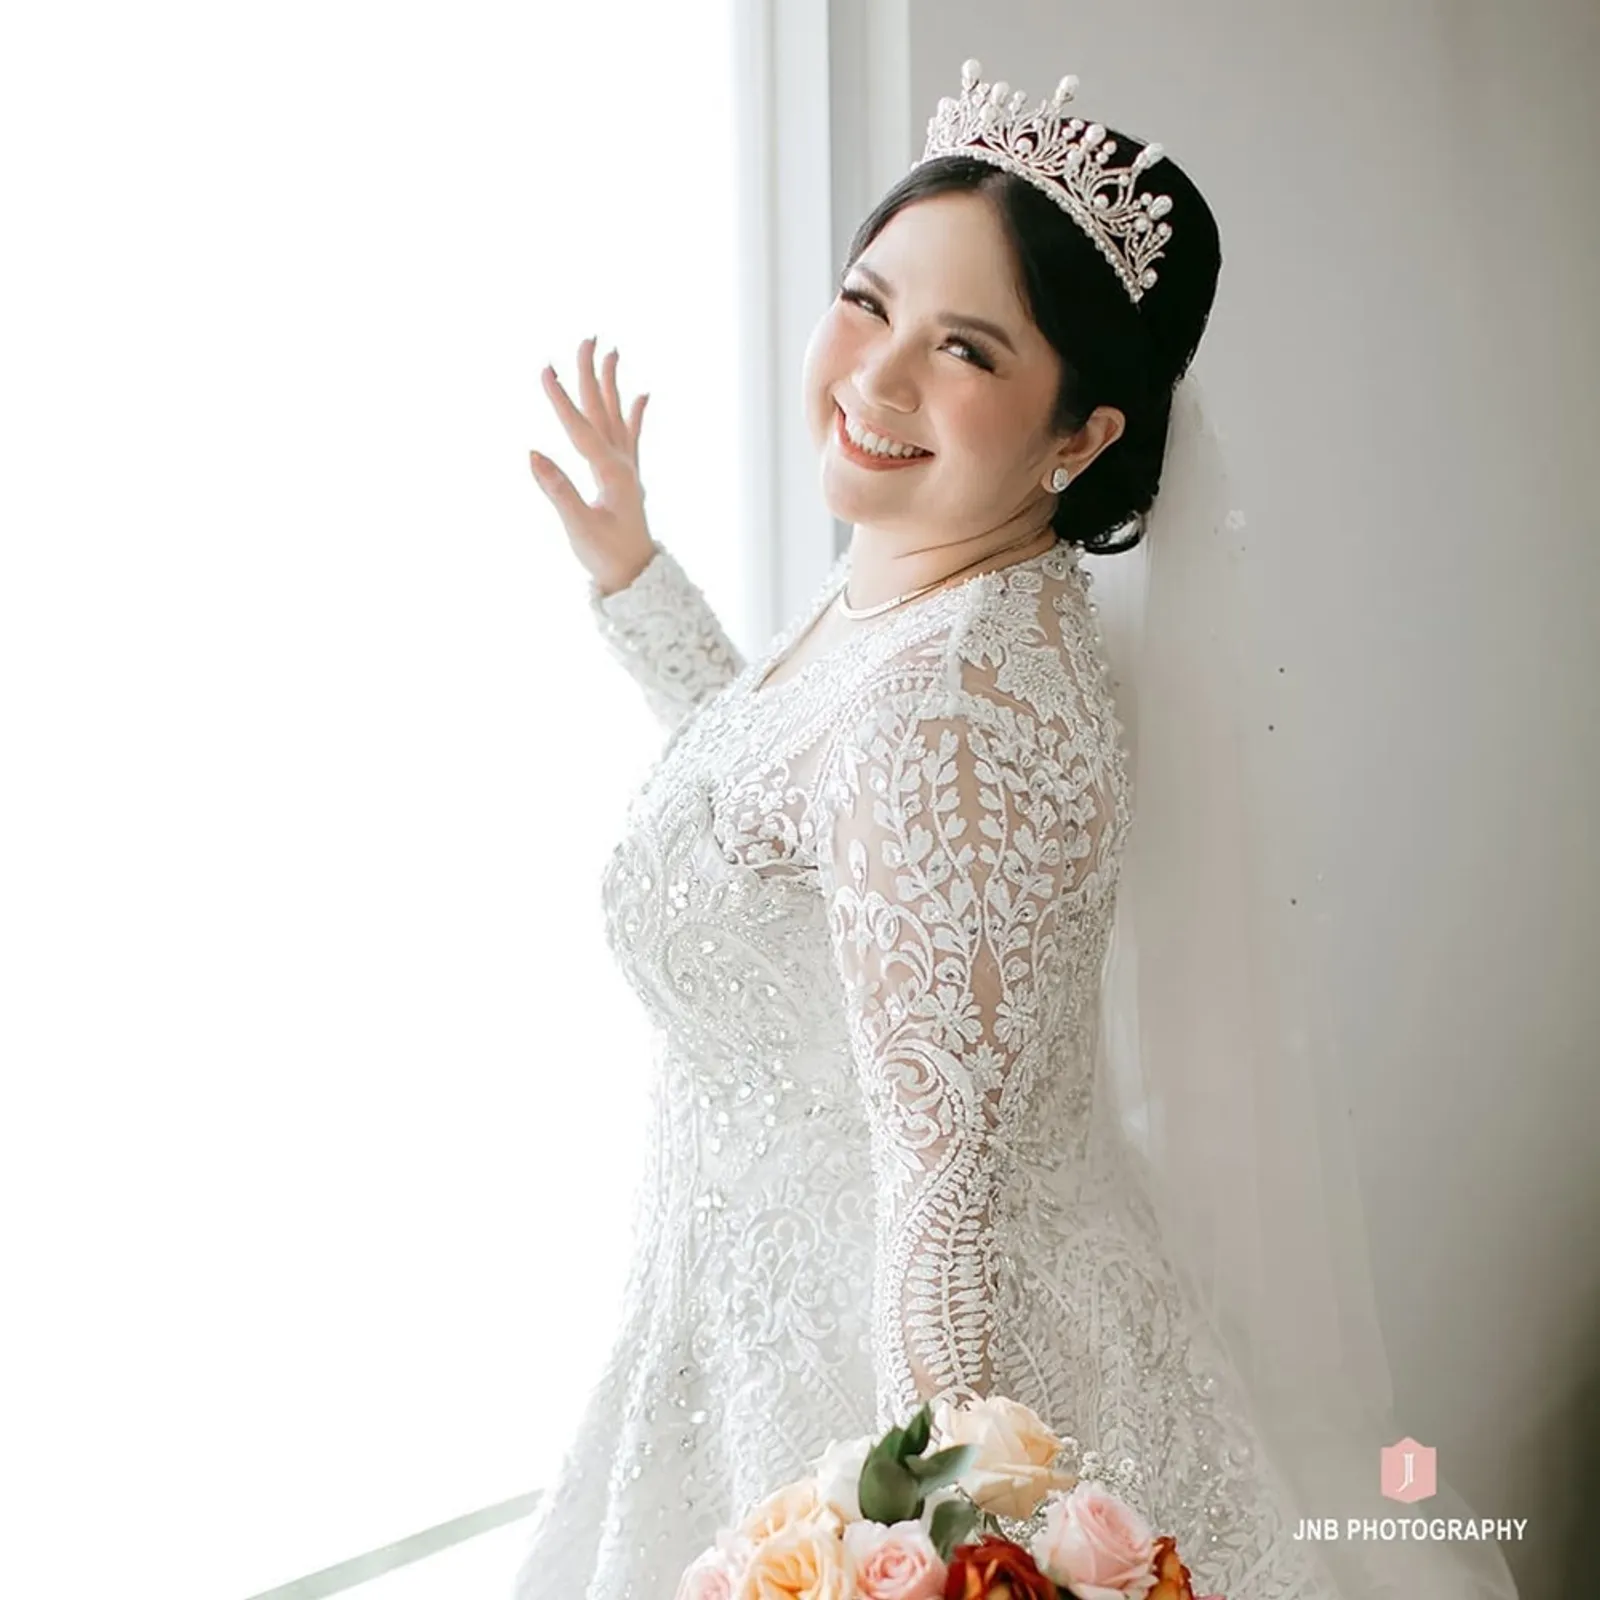 Penuh Kebahagiaan, Ini 9 Foto Pernikahan Joy Tobing dan Perwira TNI